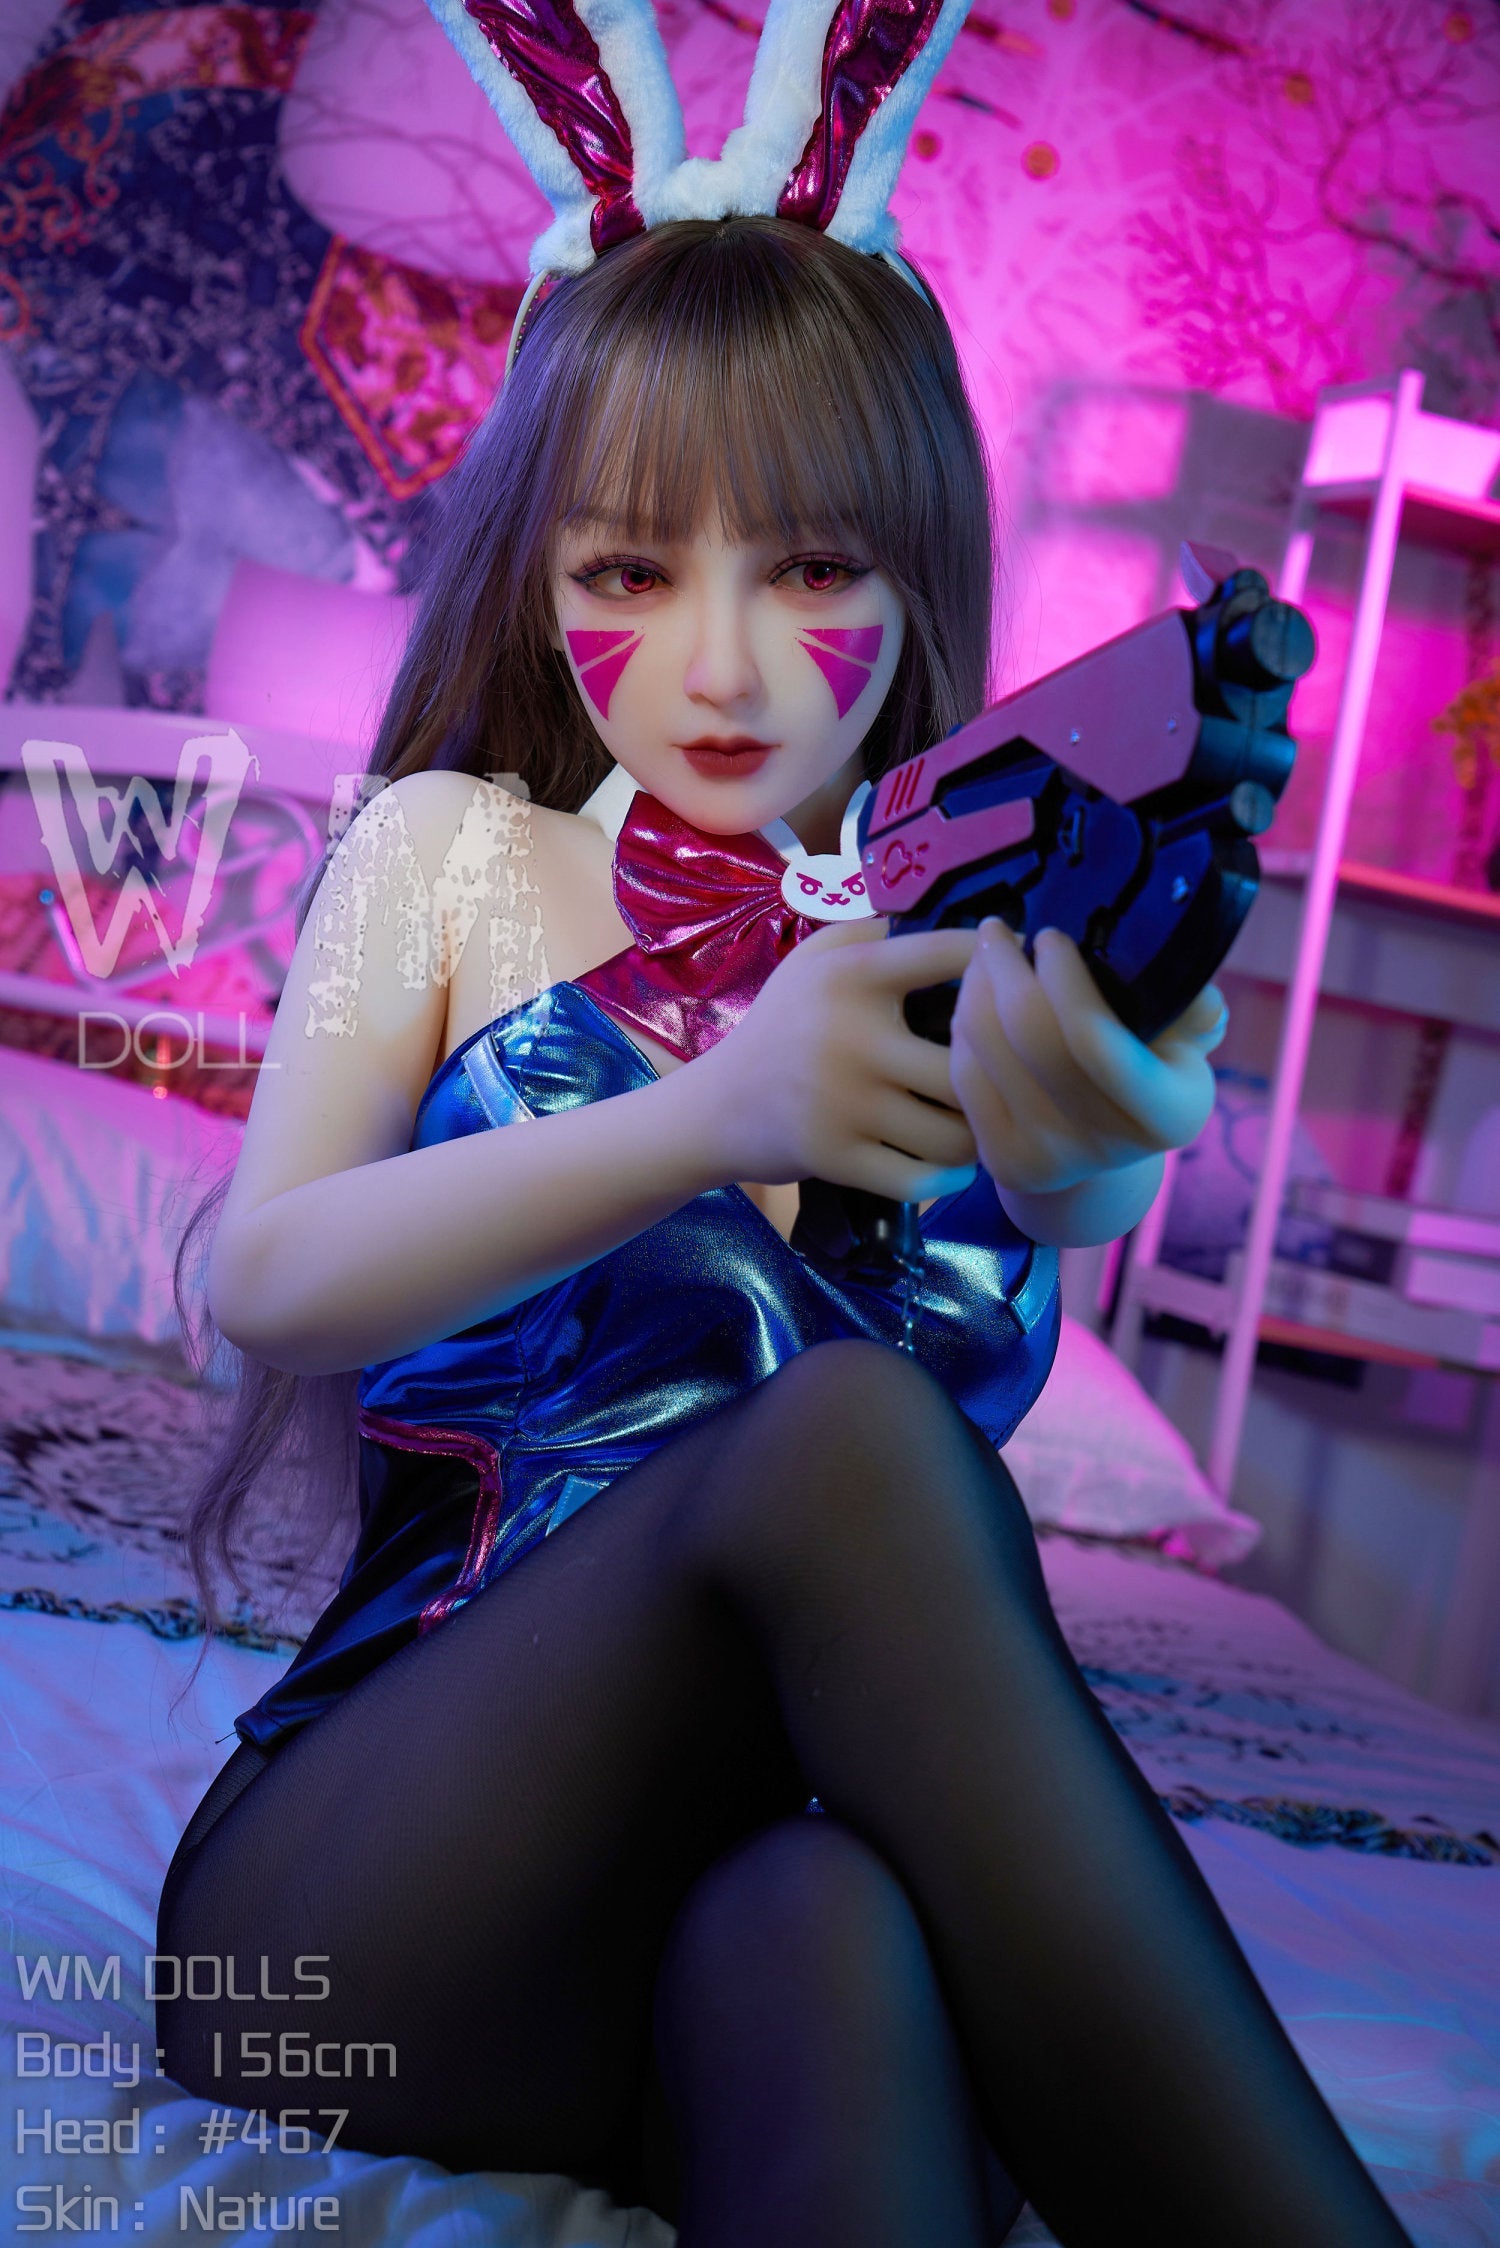 WM Doll 156 cm C TPE - Rose | Buy Sex Dolls at DOLLS ACTUALLY